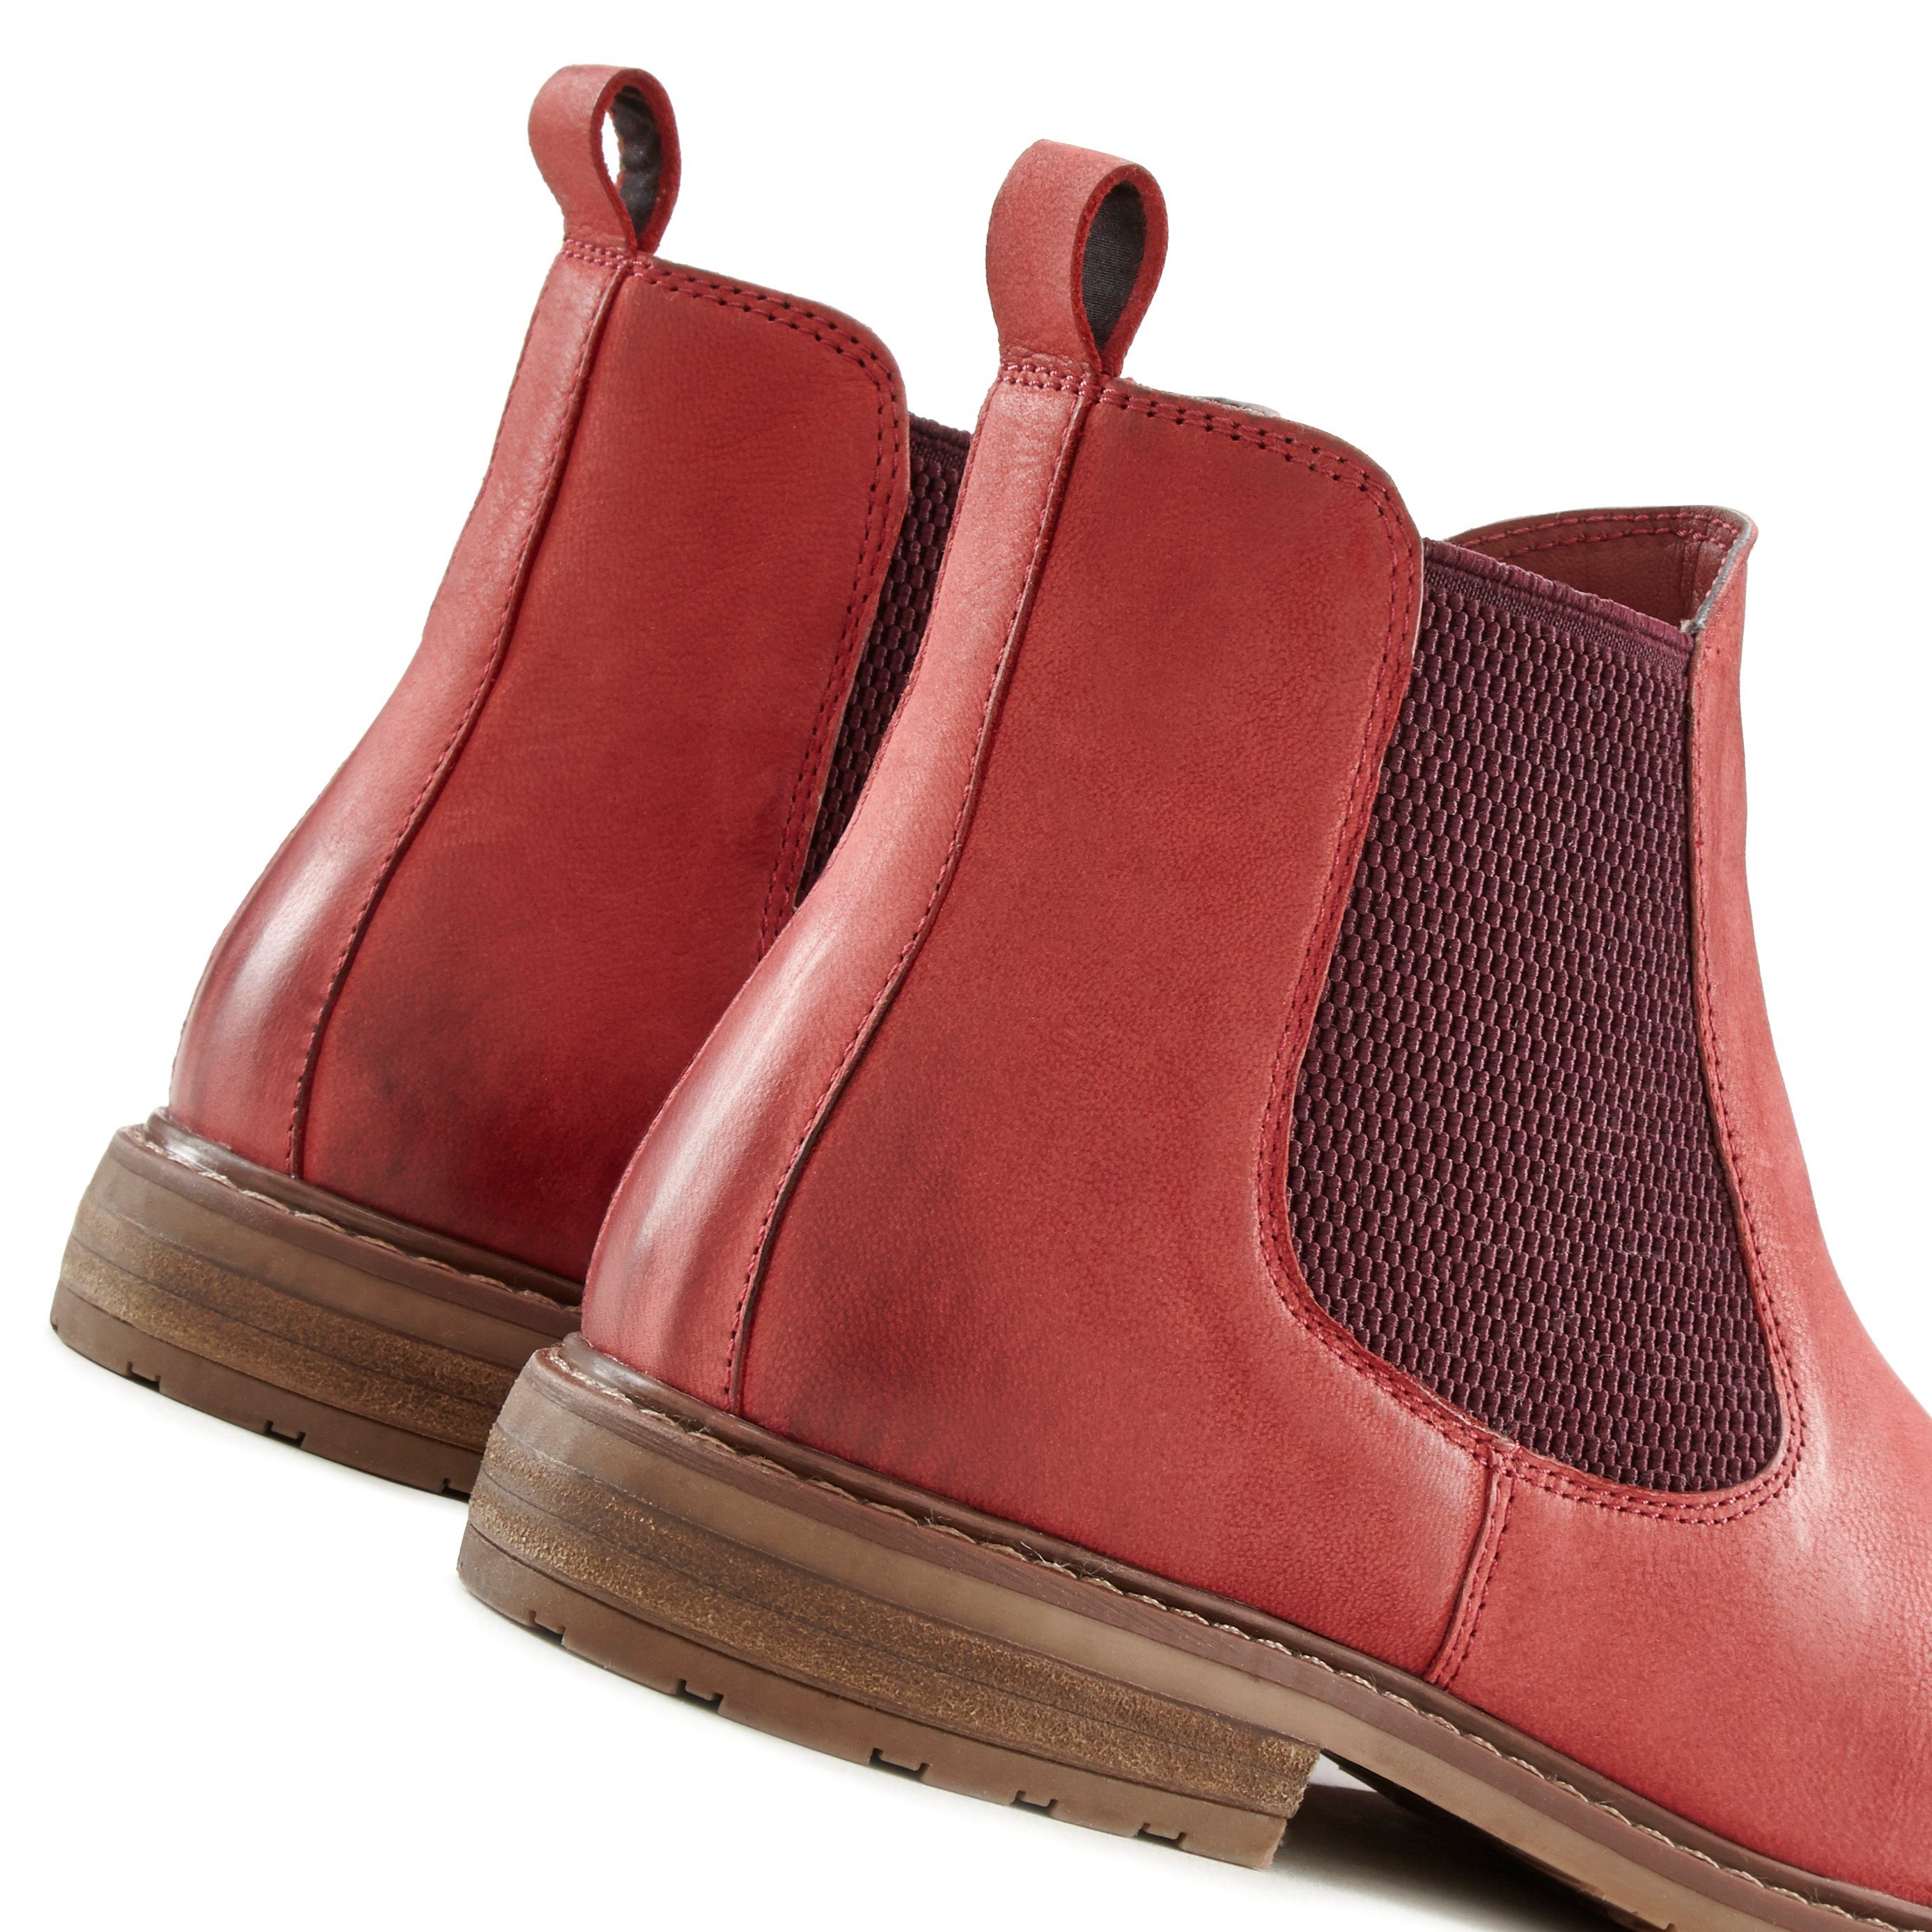 LASCANA Chelseaboots aus Leder bequemer Stiefelette Laufsohle, Boots, rot Ankle mit